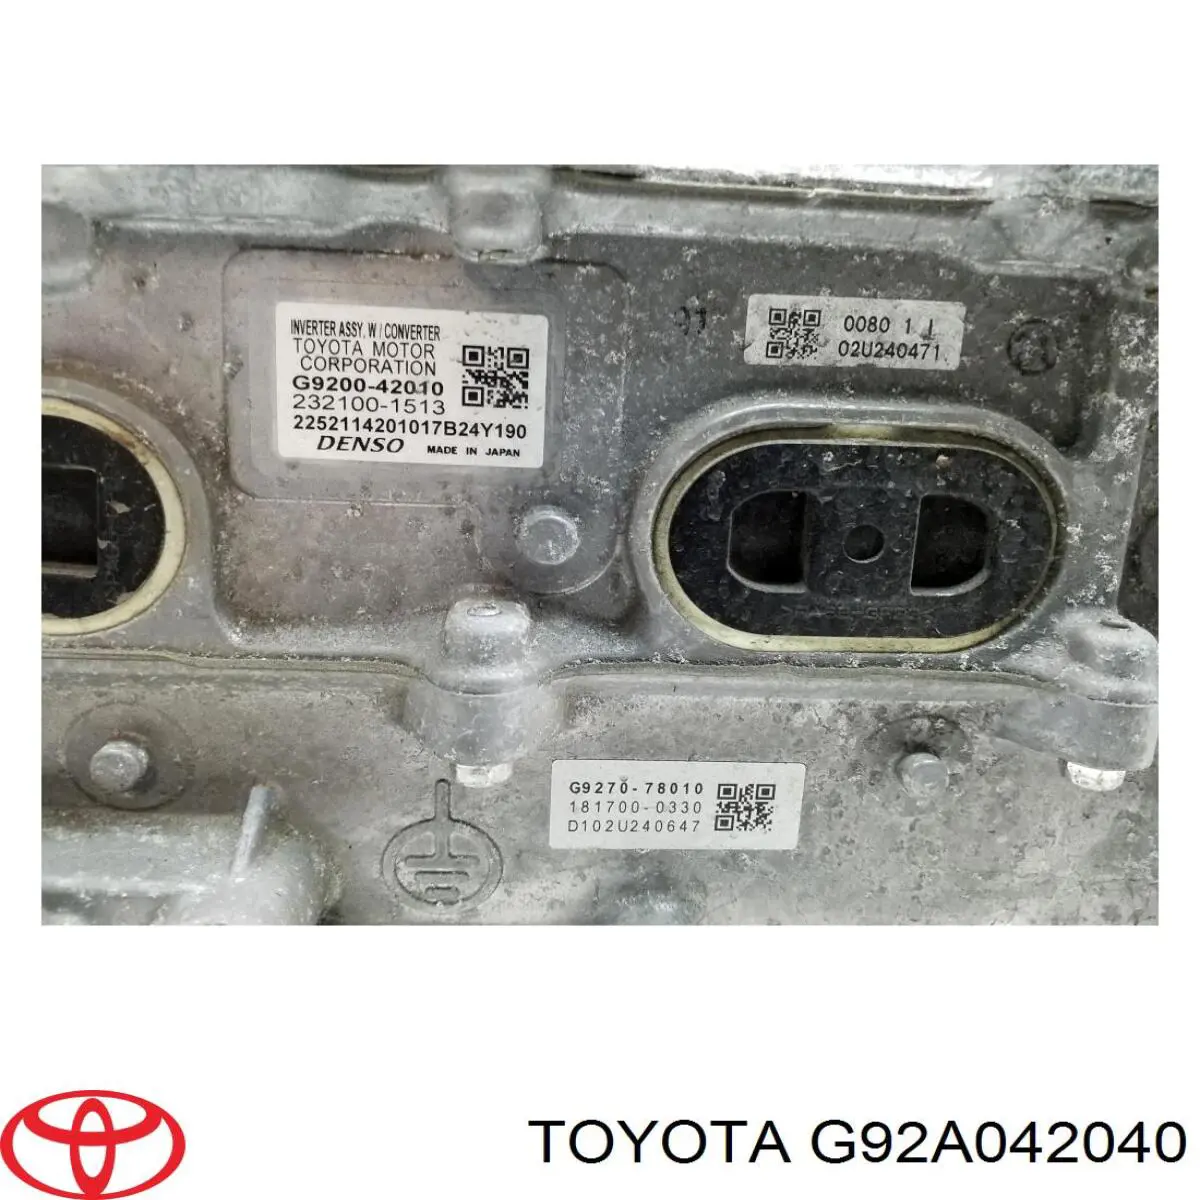 G92A042040 Toyota inversor de potencia